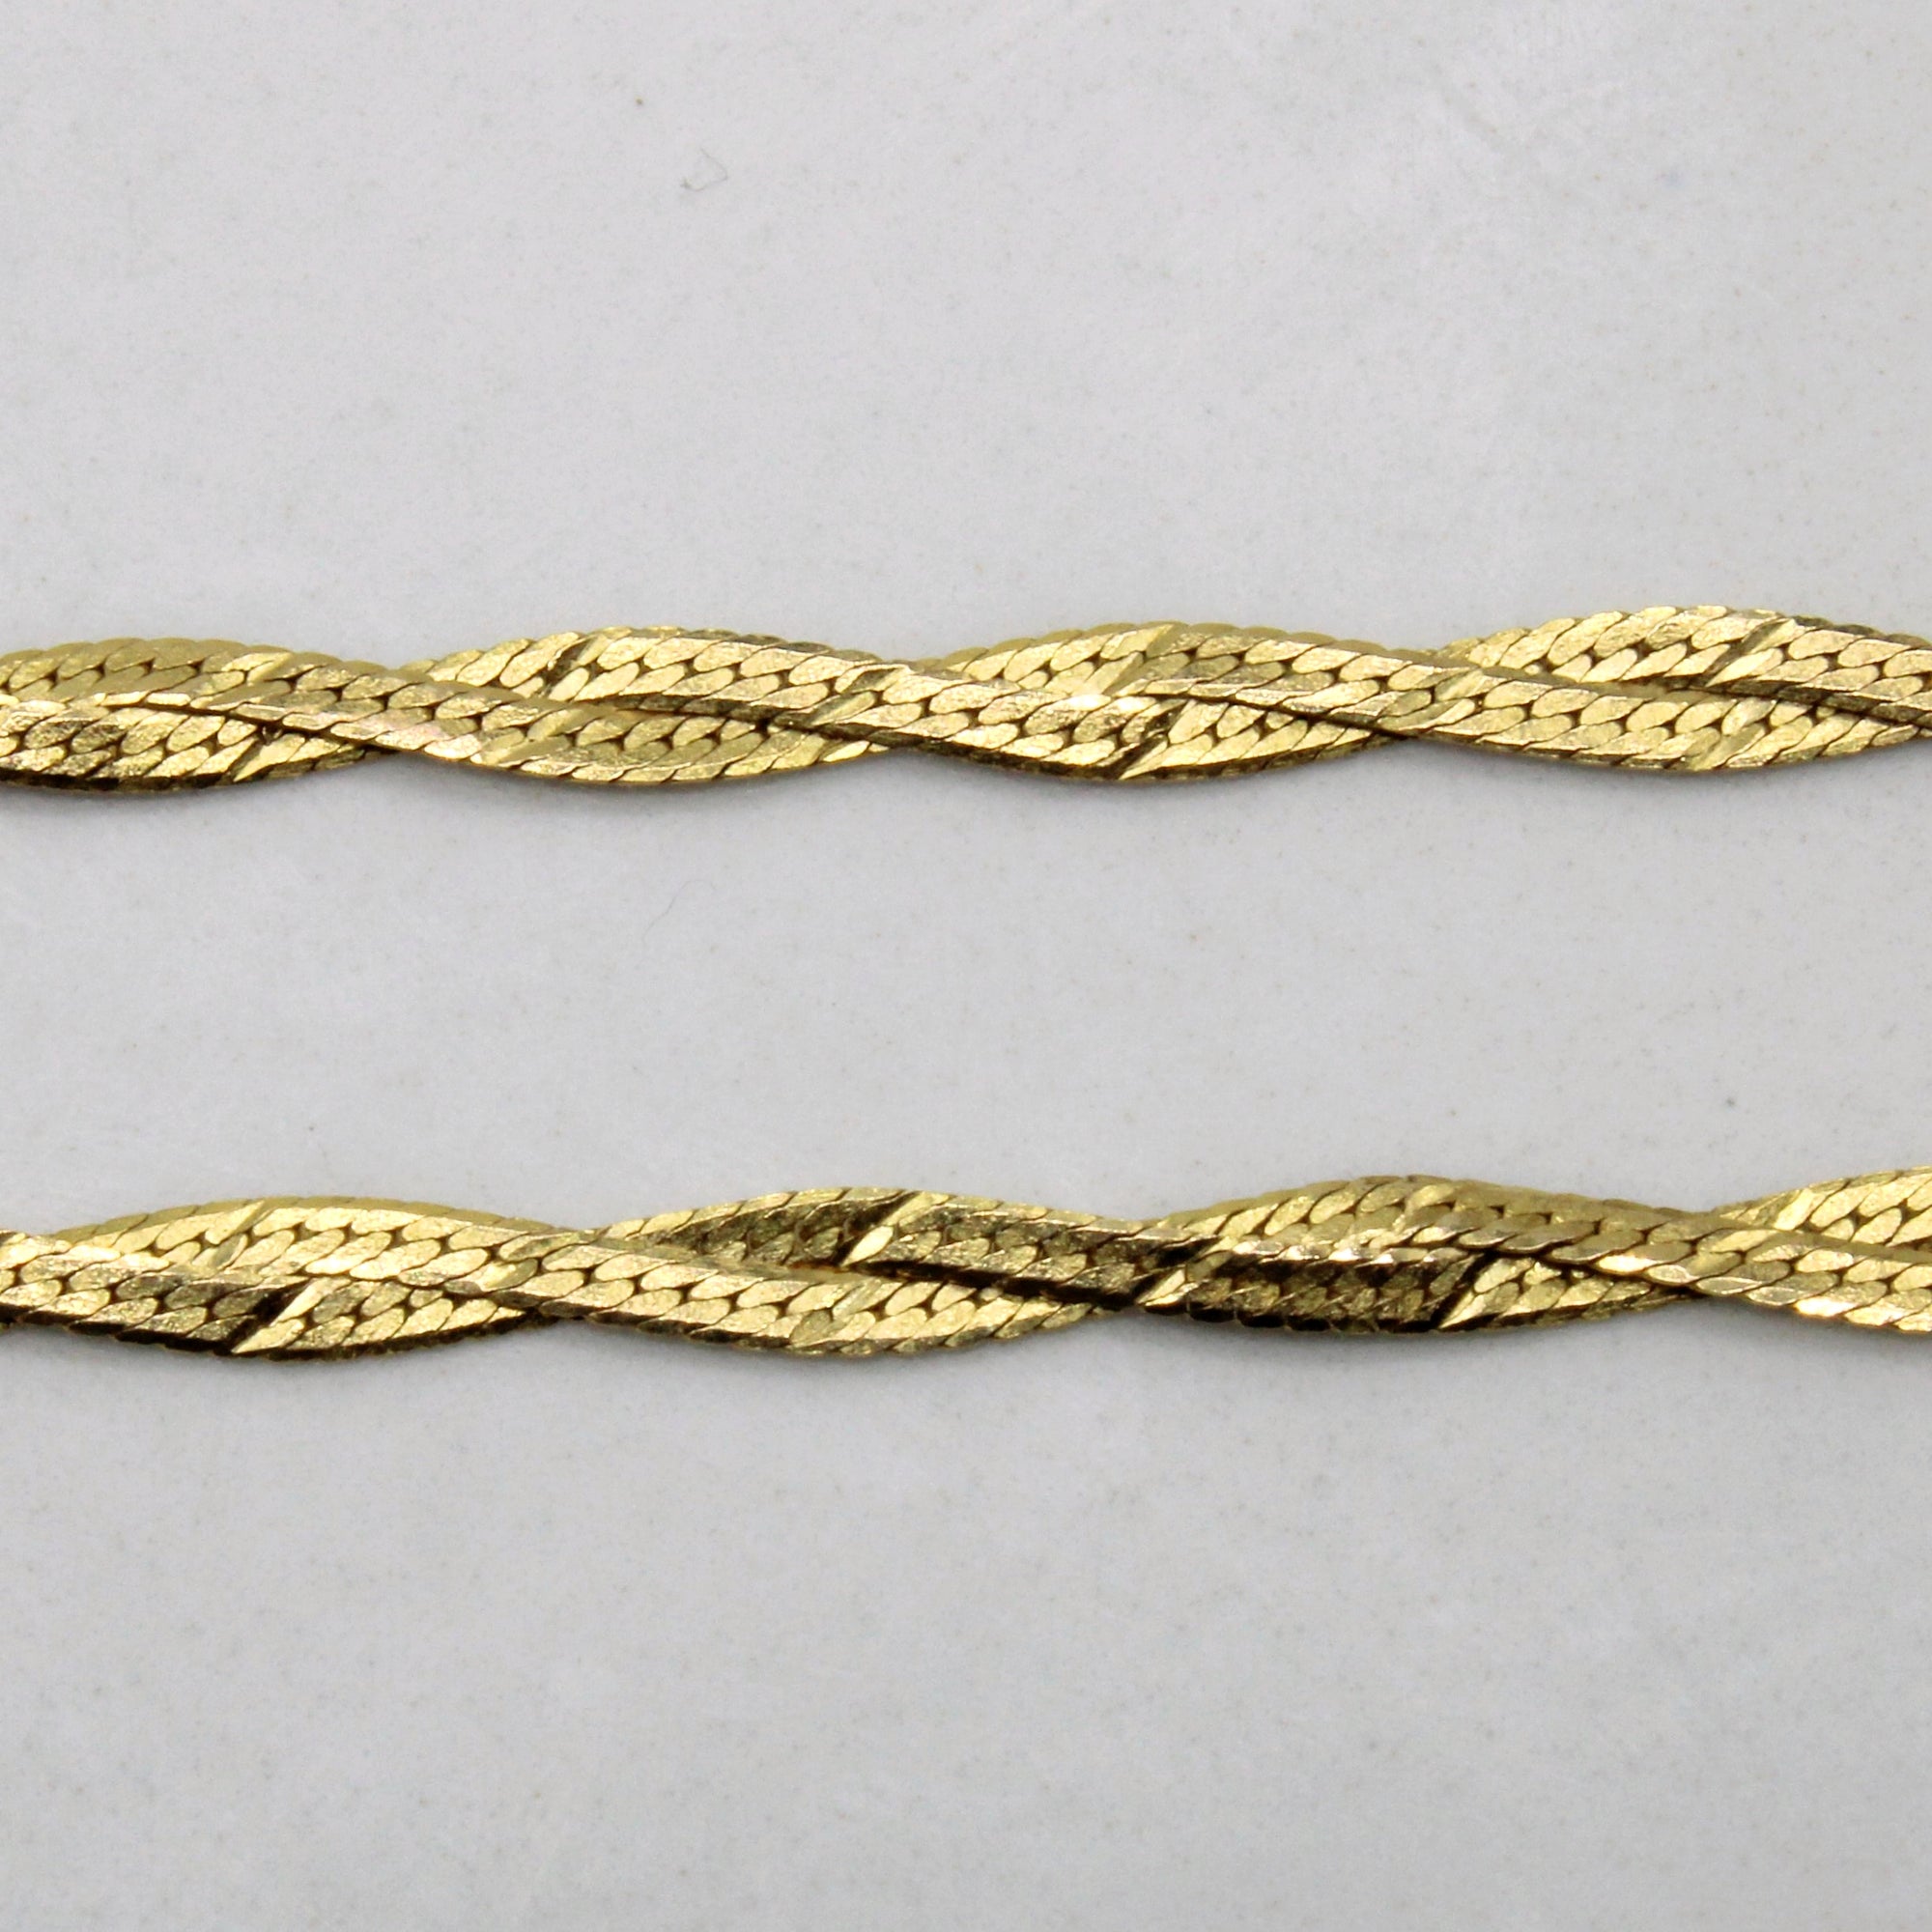 14k Yellow Gold Woven Herringbone Necklace | 17